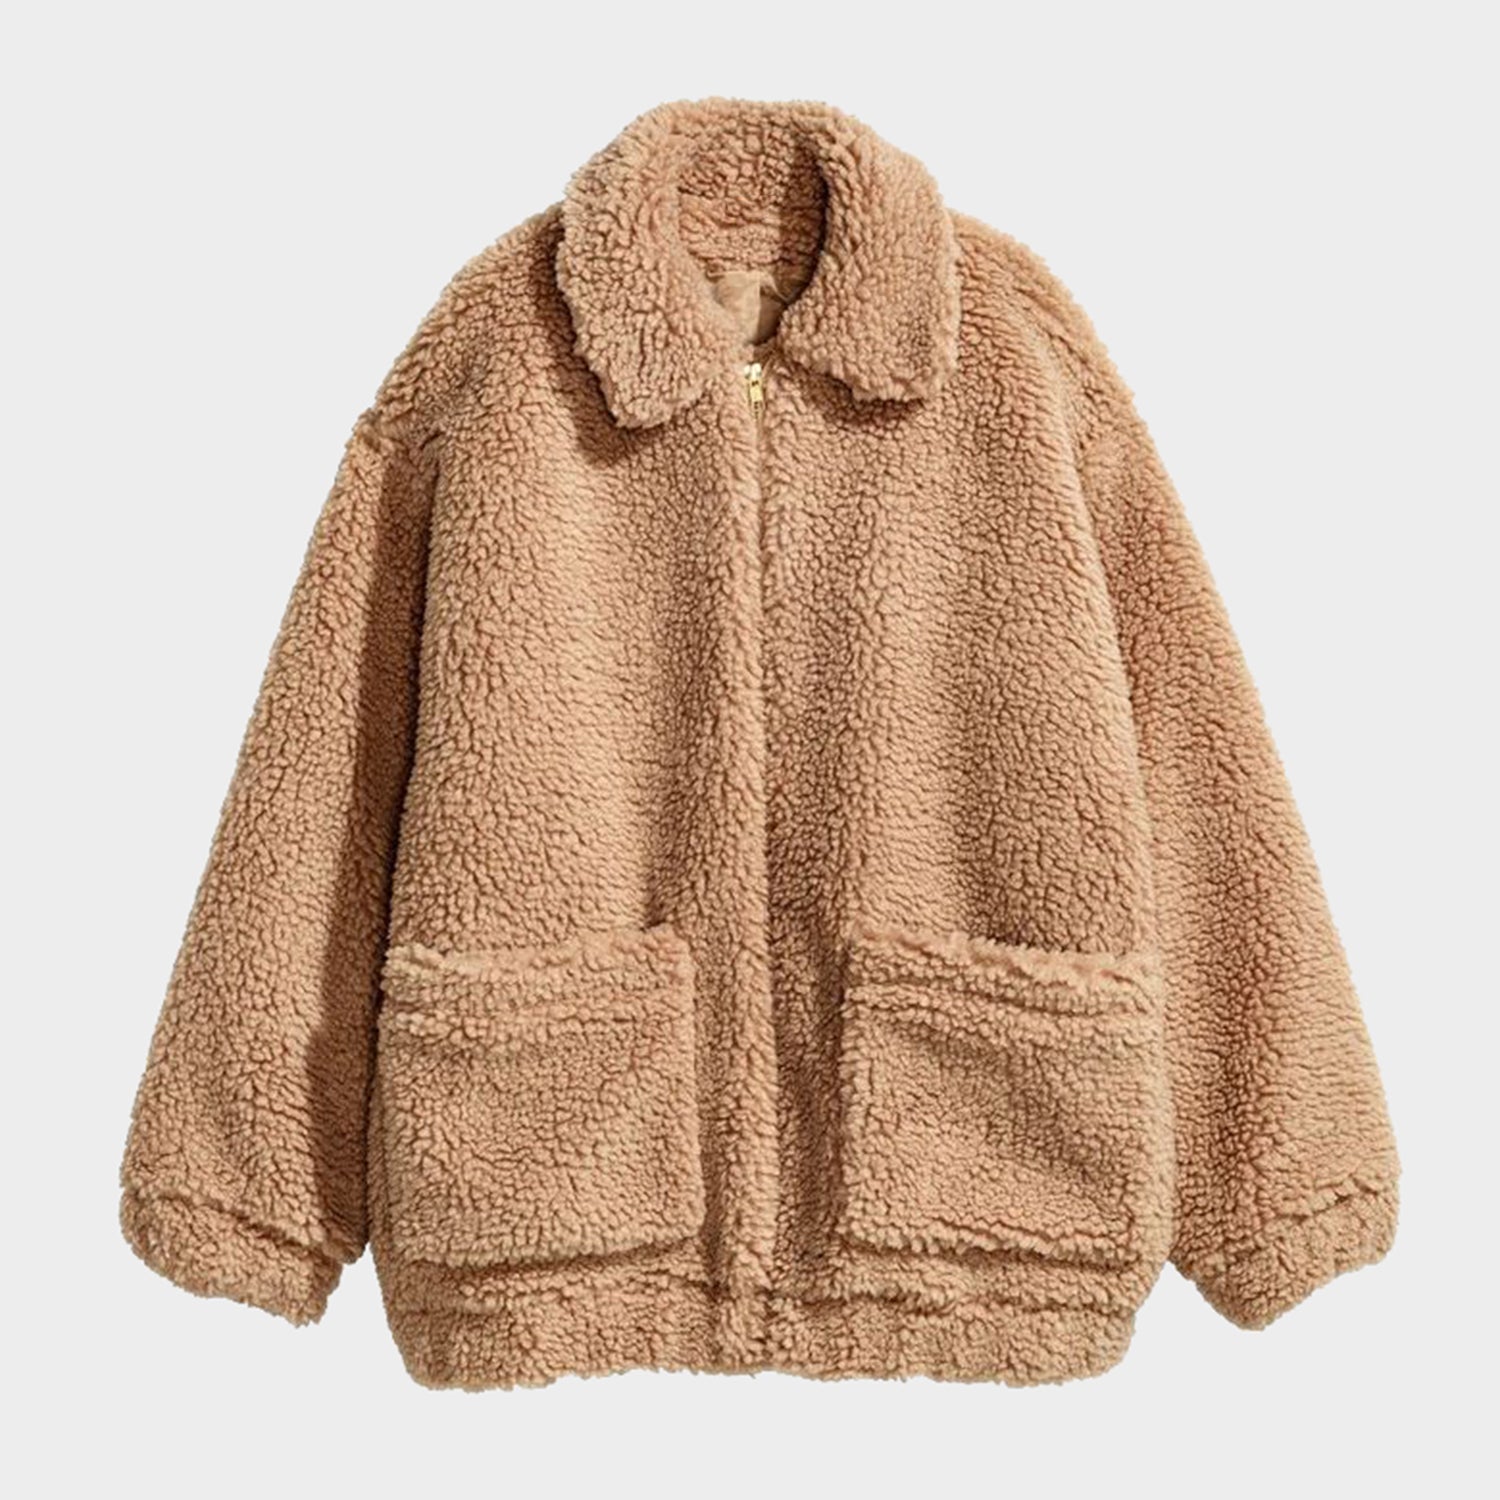 Is this $32 teddy jacket the 'Amazon coat' of 2020? | CNN Underscored